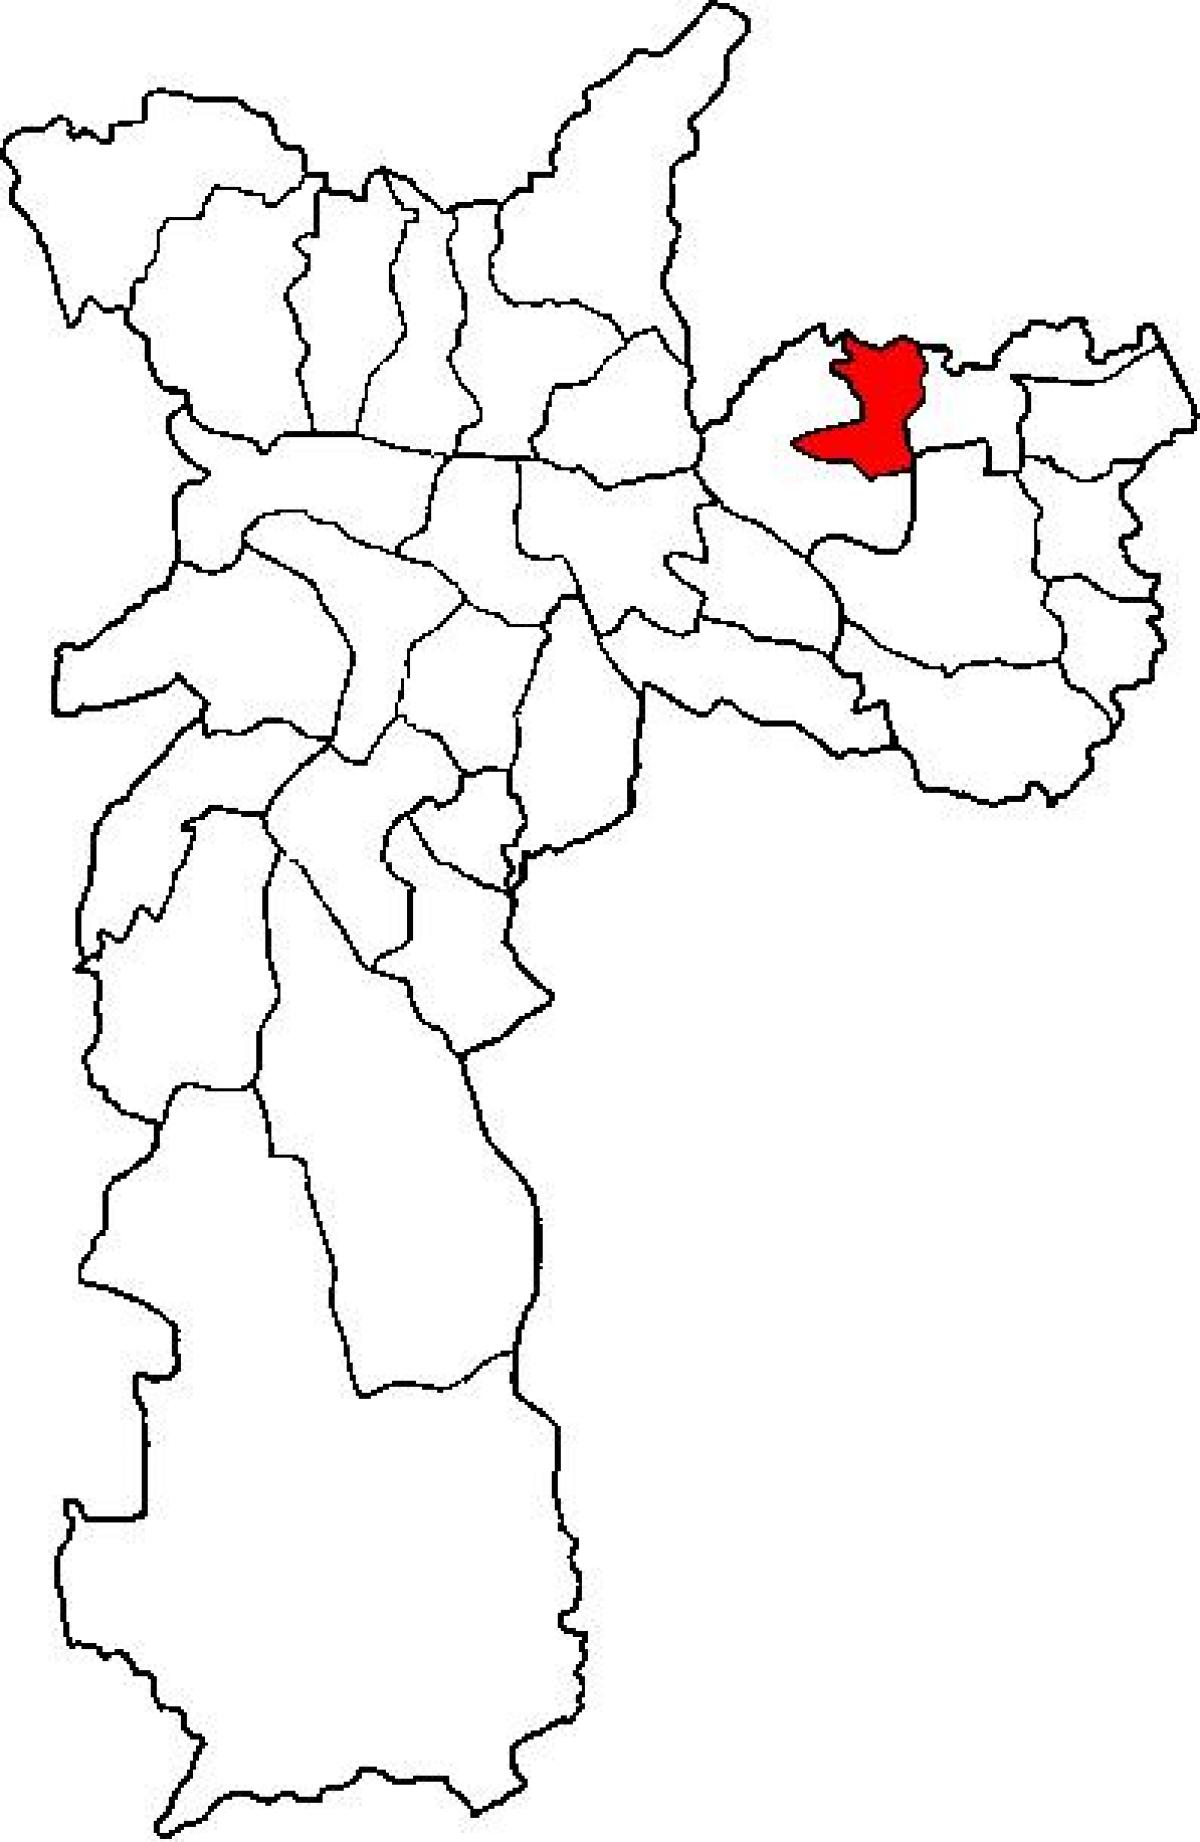 Peta dari Ermelino Matarazzo sub-prefektur Sao Paulo